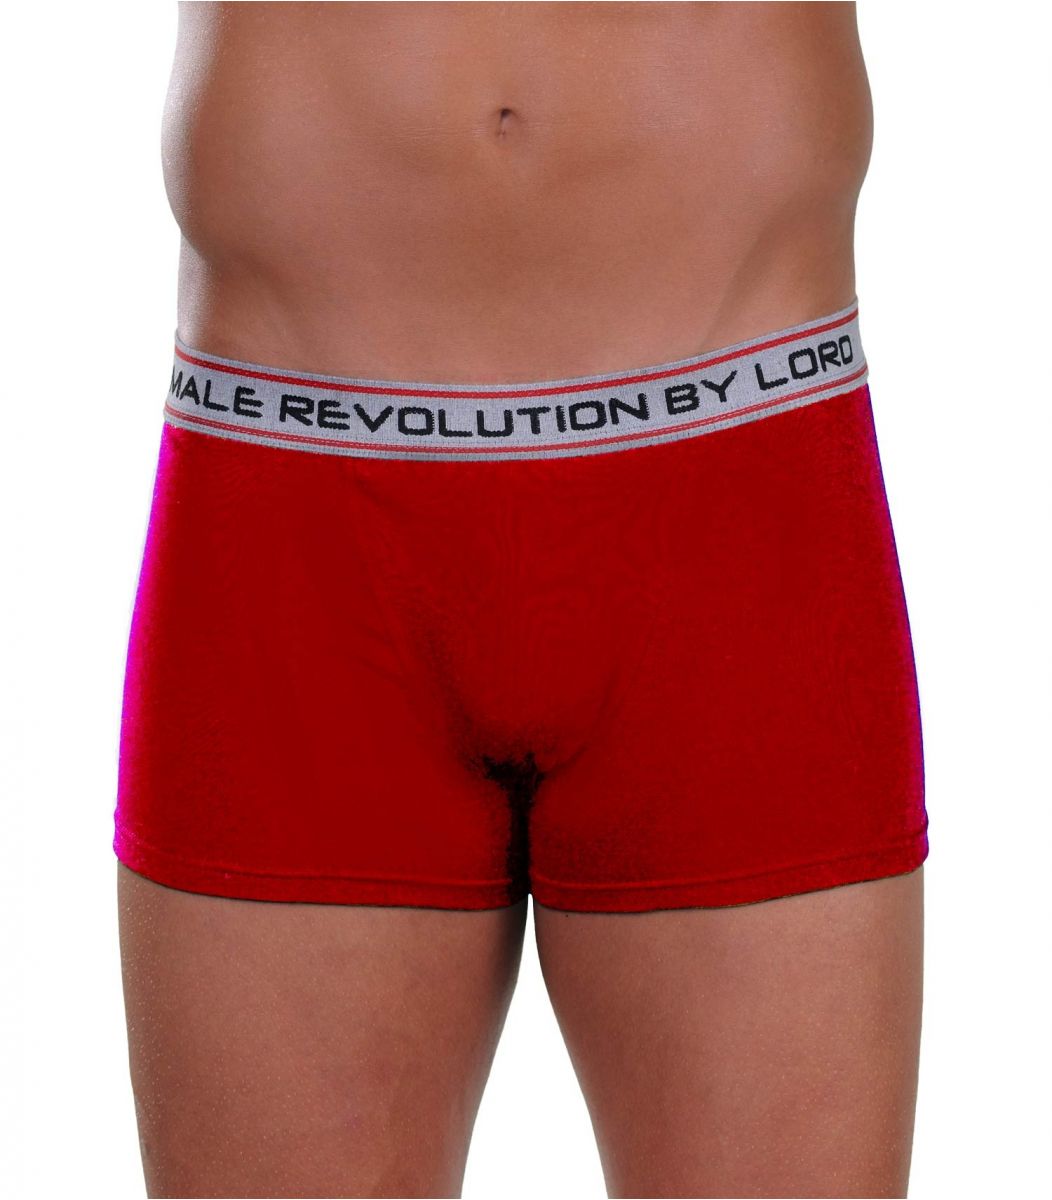 Boxer, Revolution, κόκκινο